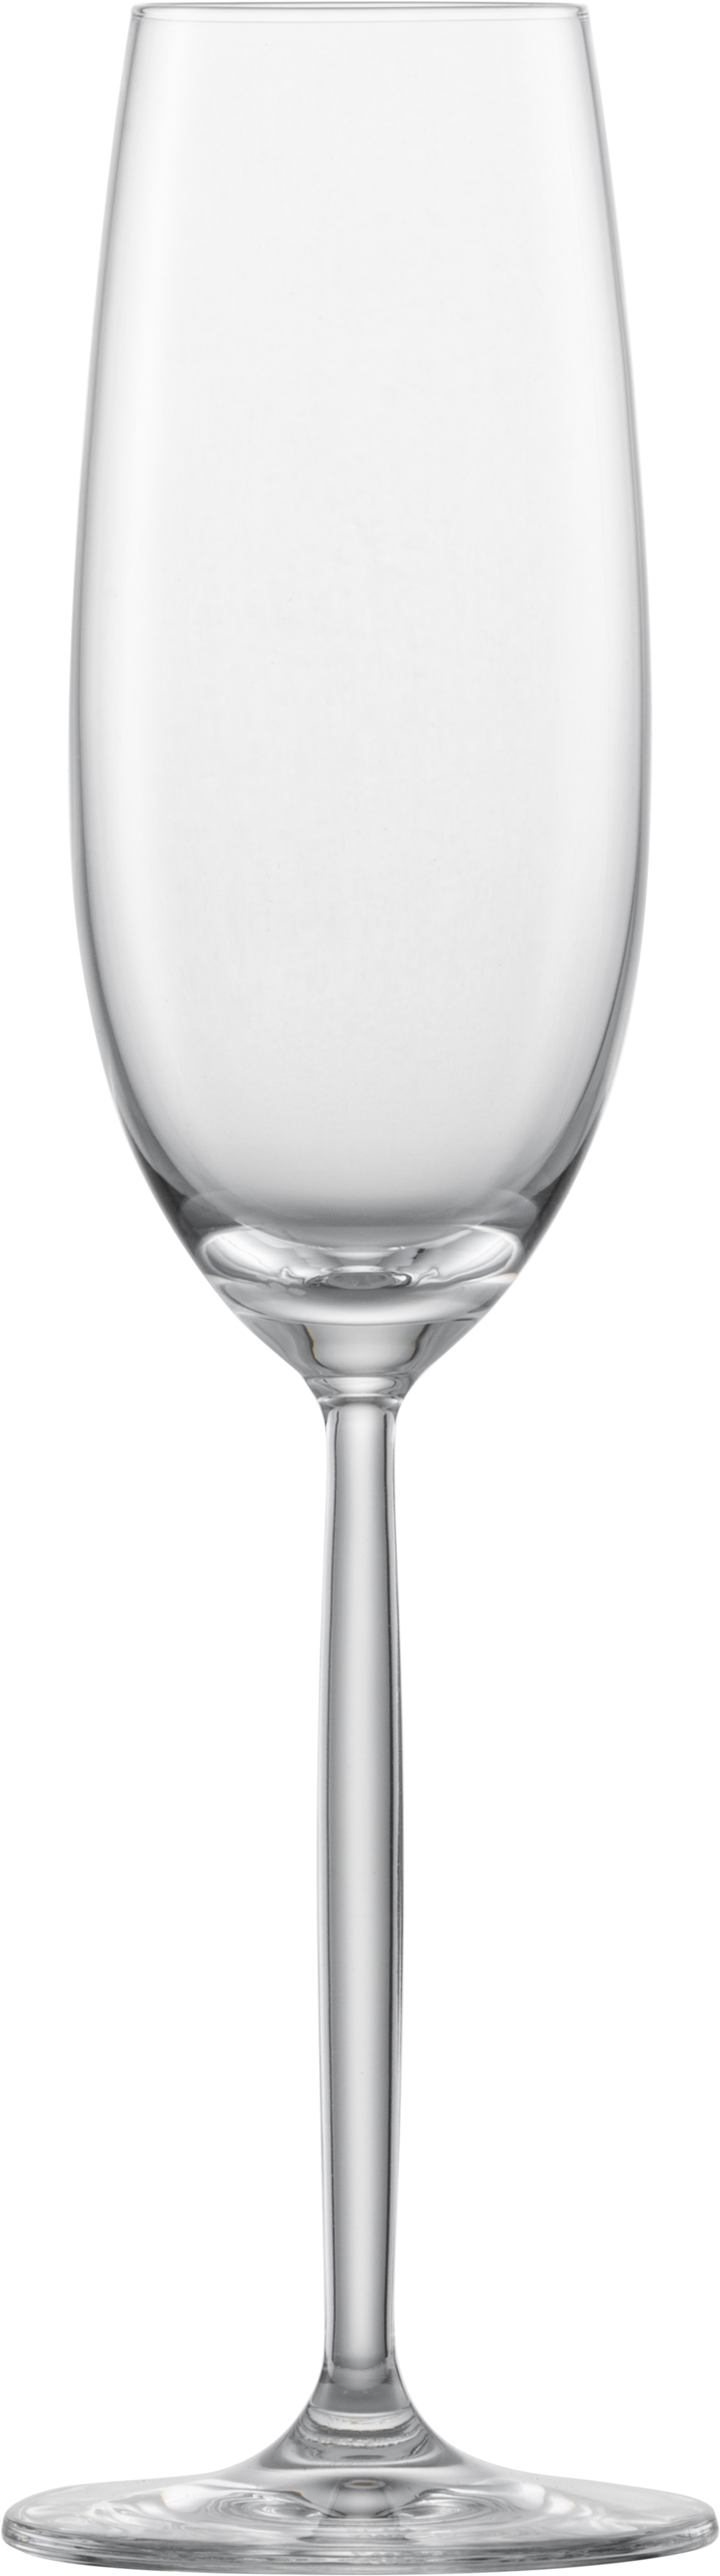 Schott Zwiesel - Diva Champagne glass (set of 2)